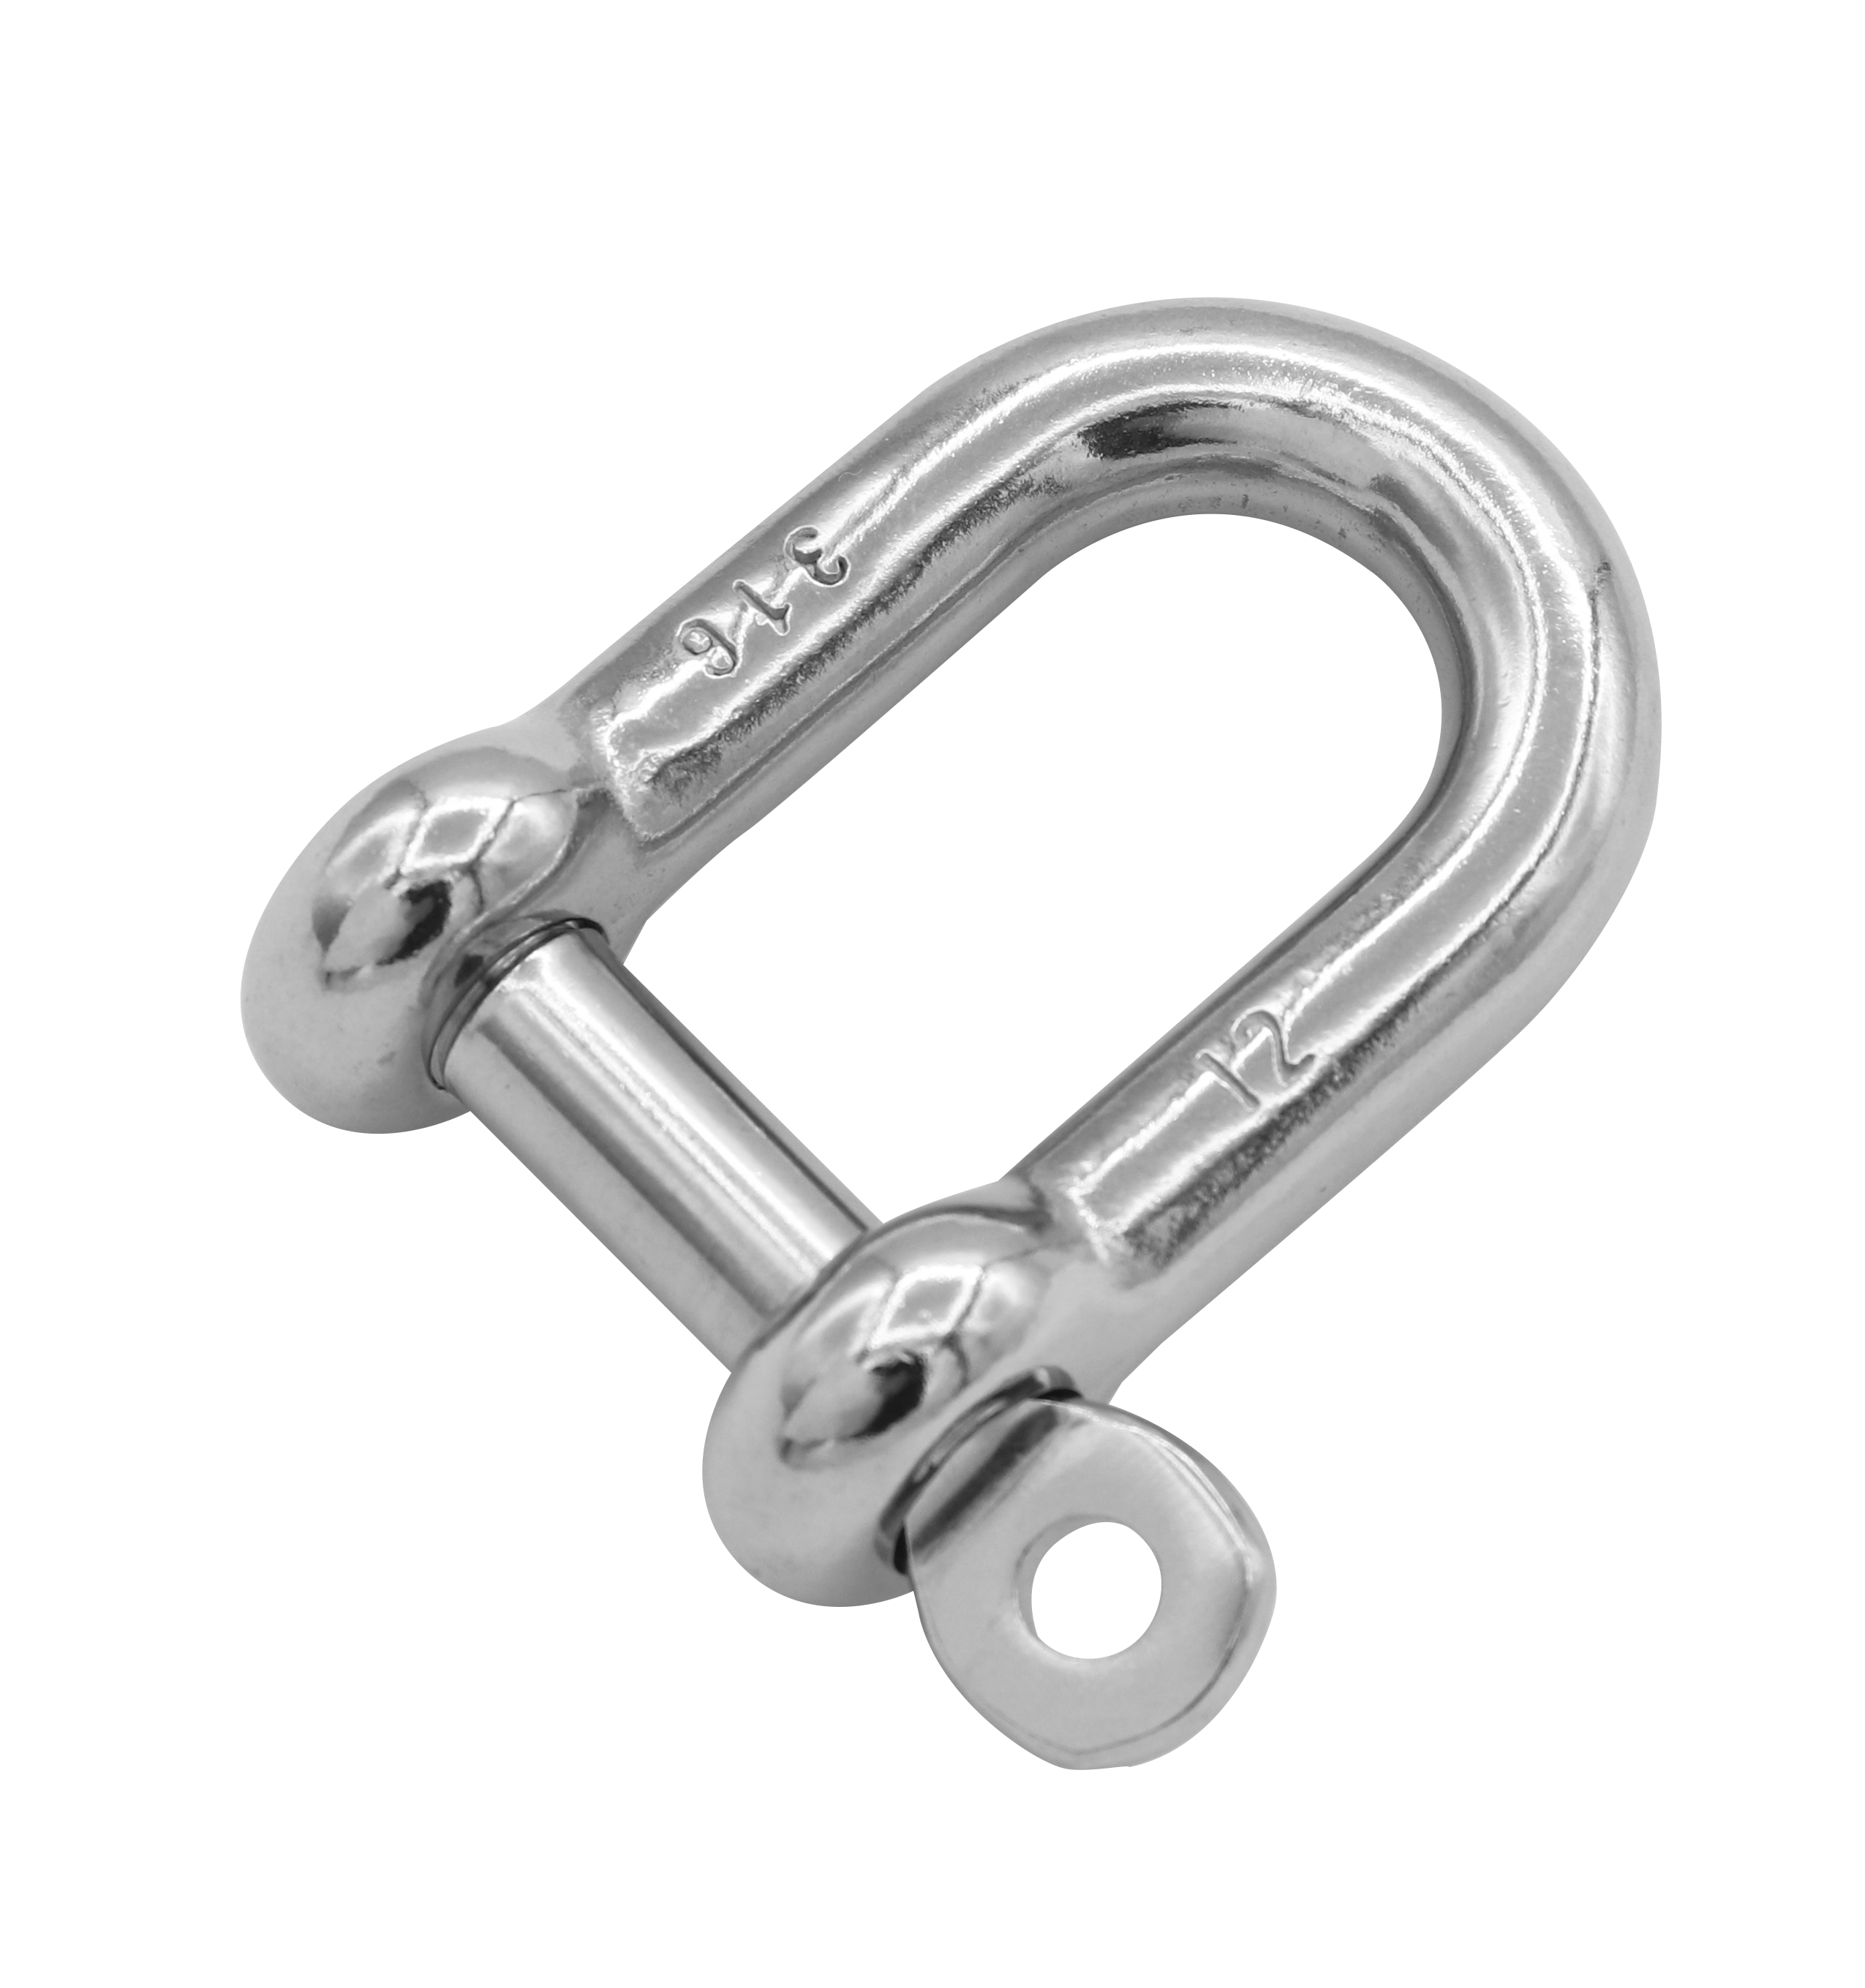 S360LK D-shackle (locking pin) -316